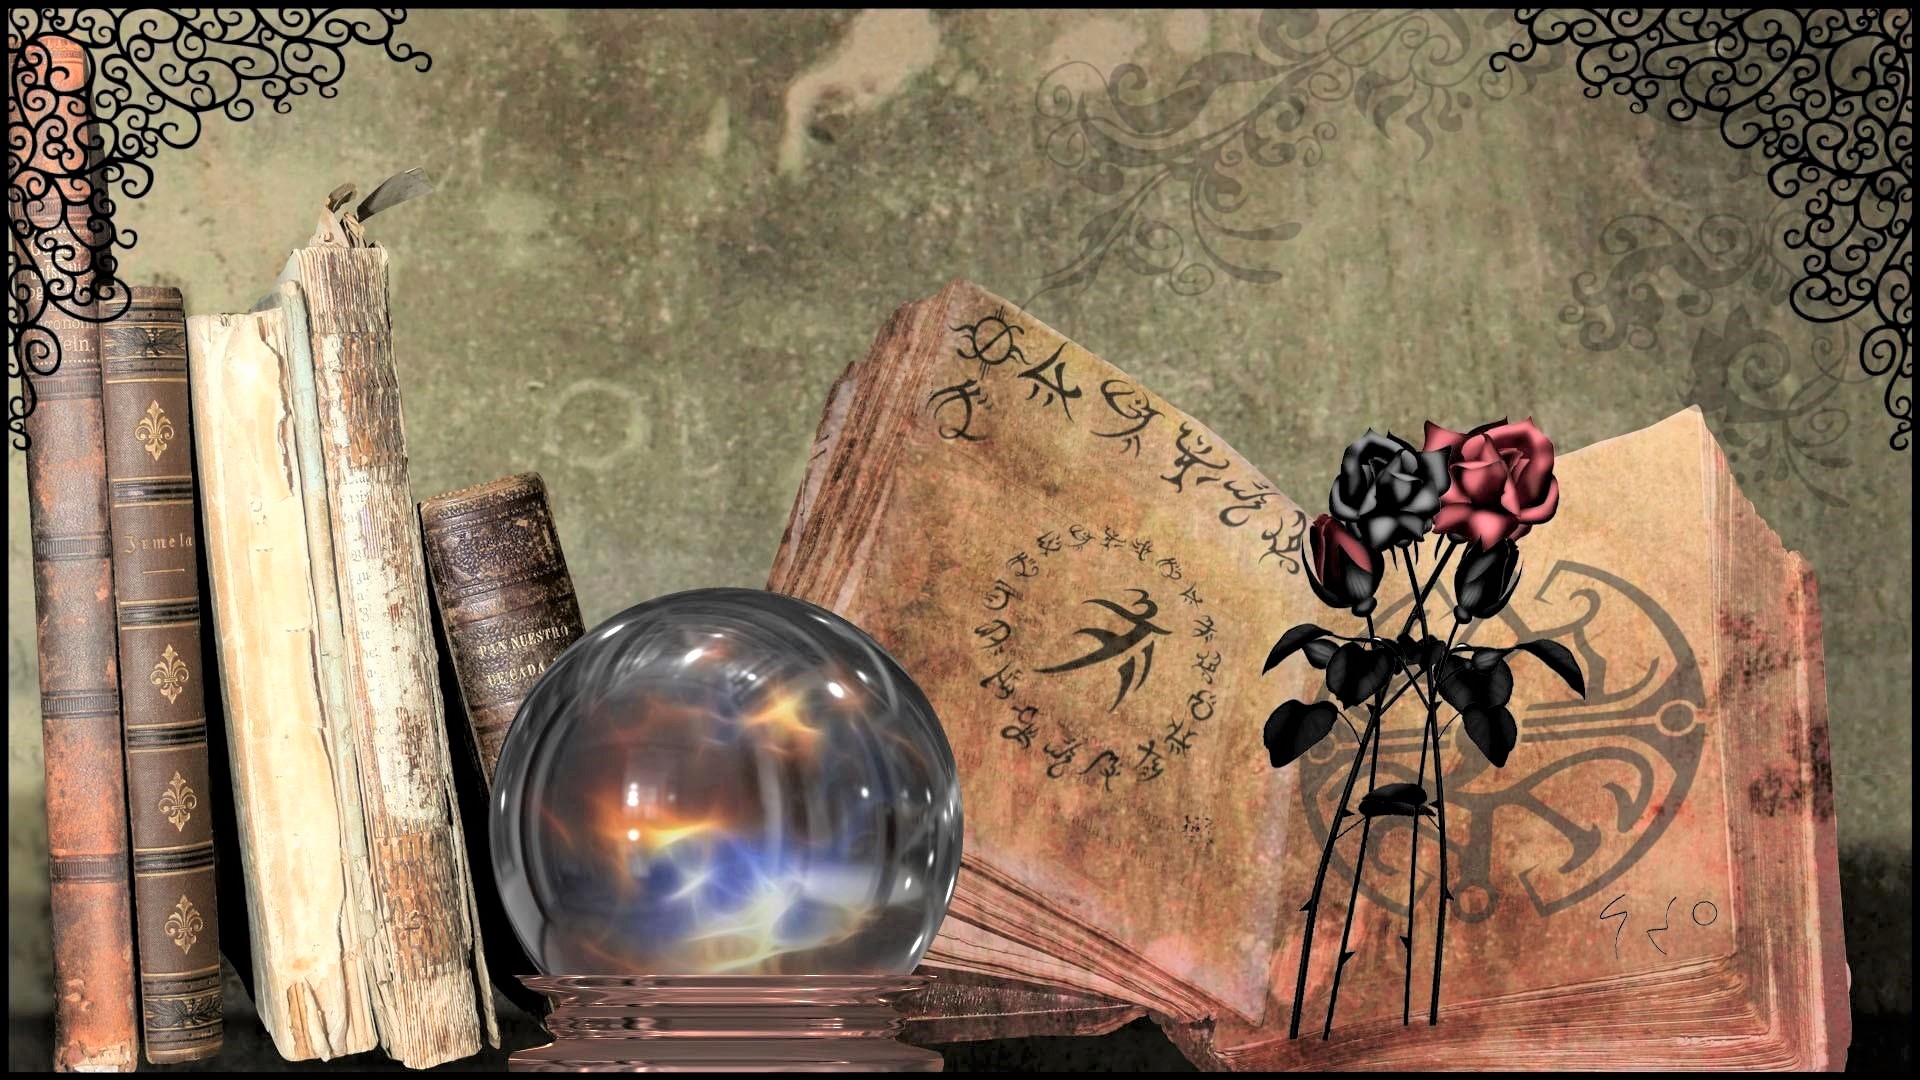 Artistic Book Crystal Ball Magic Rose Still Life 1920x1080